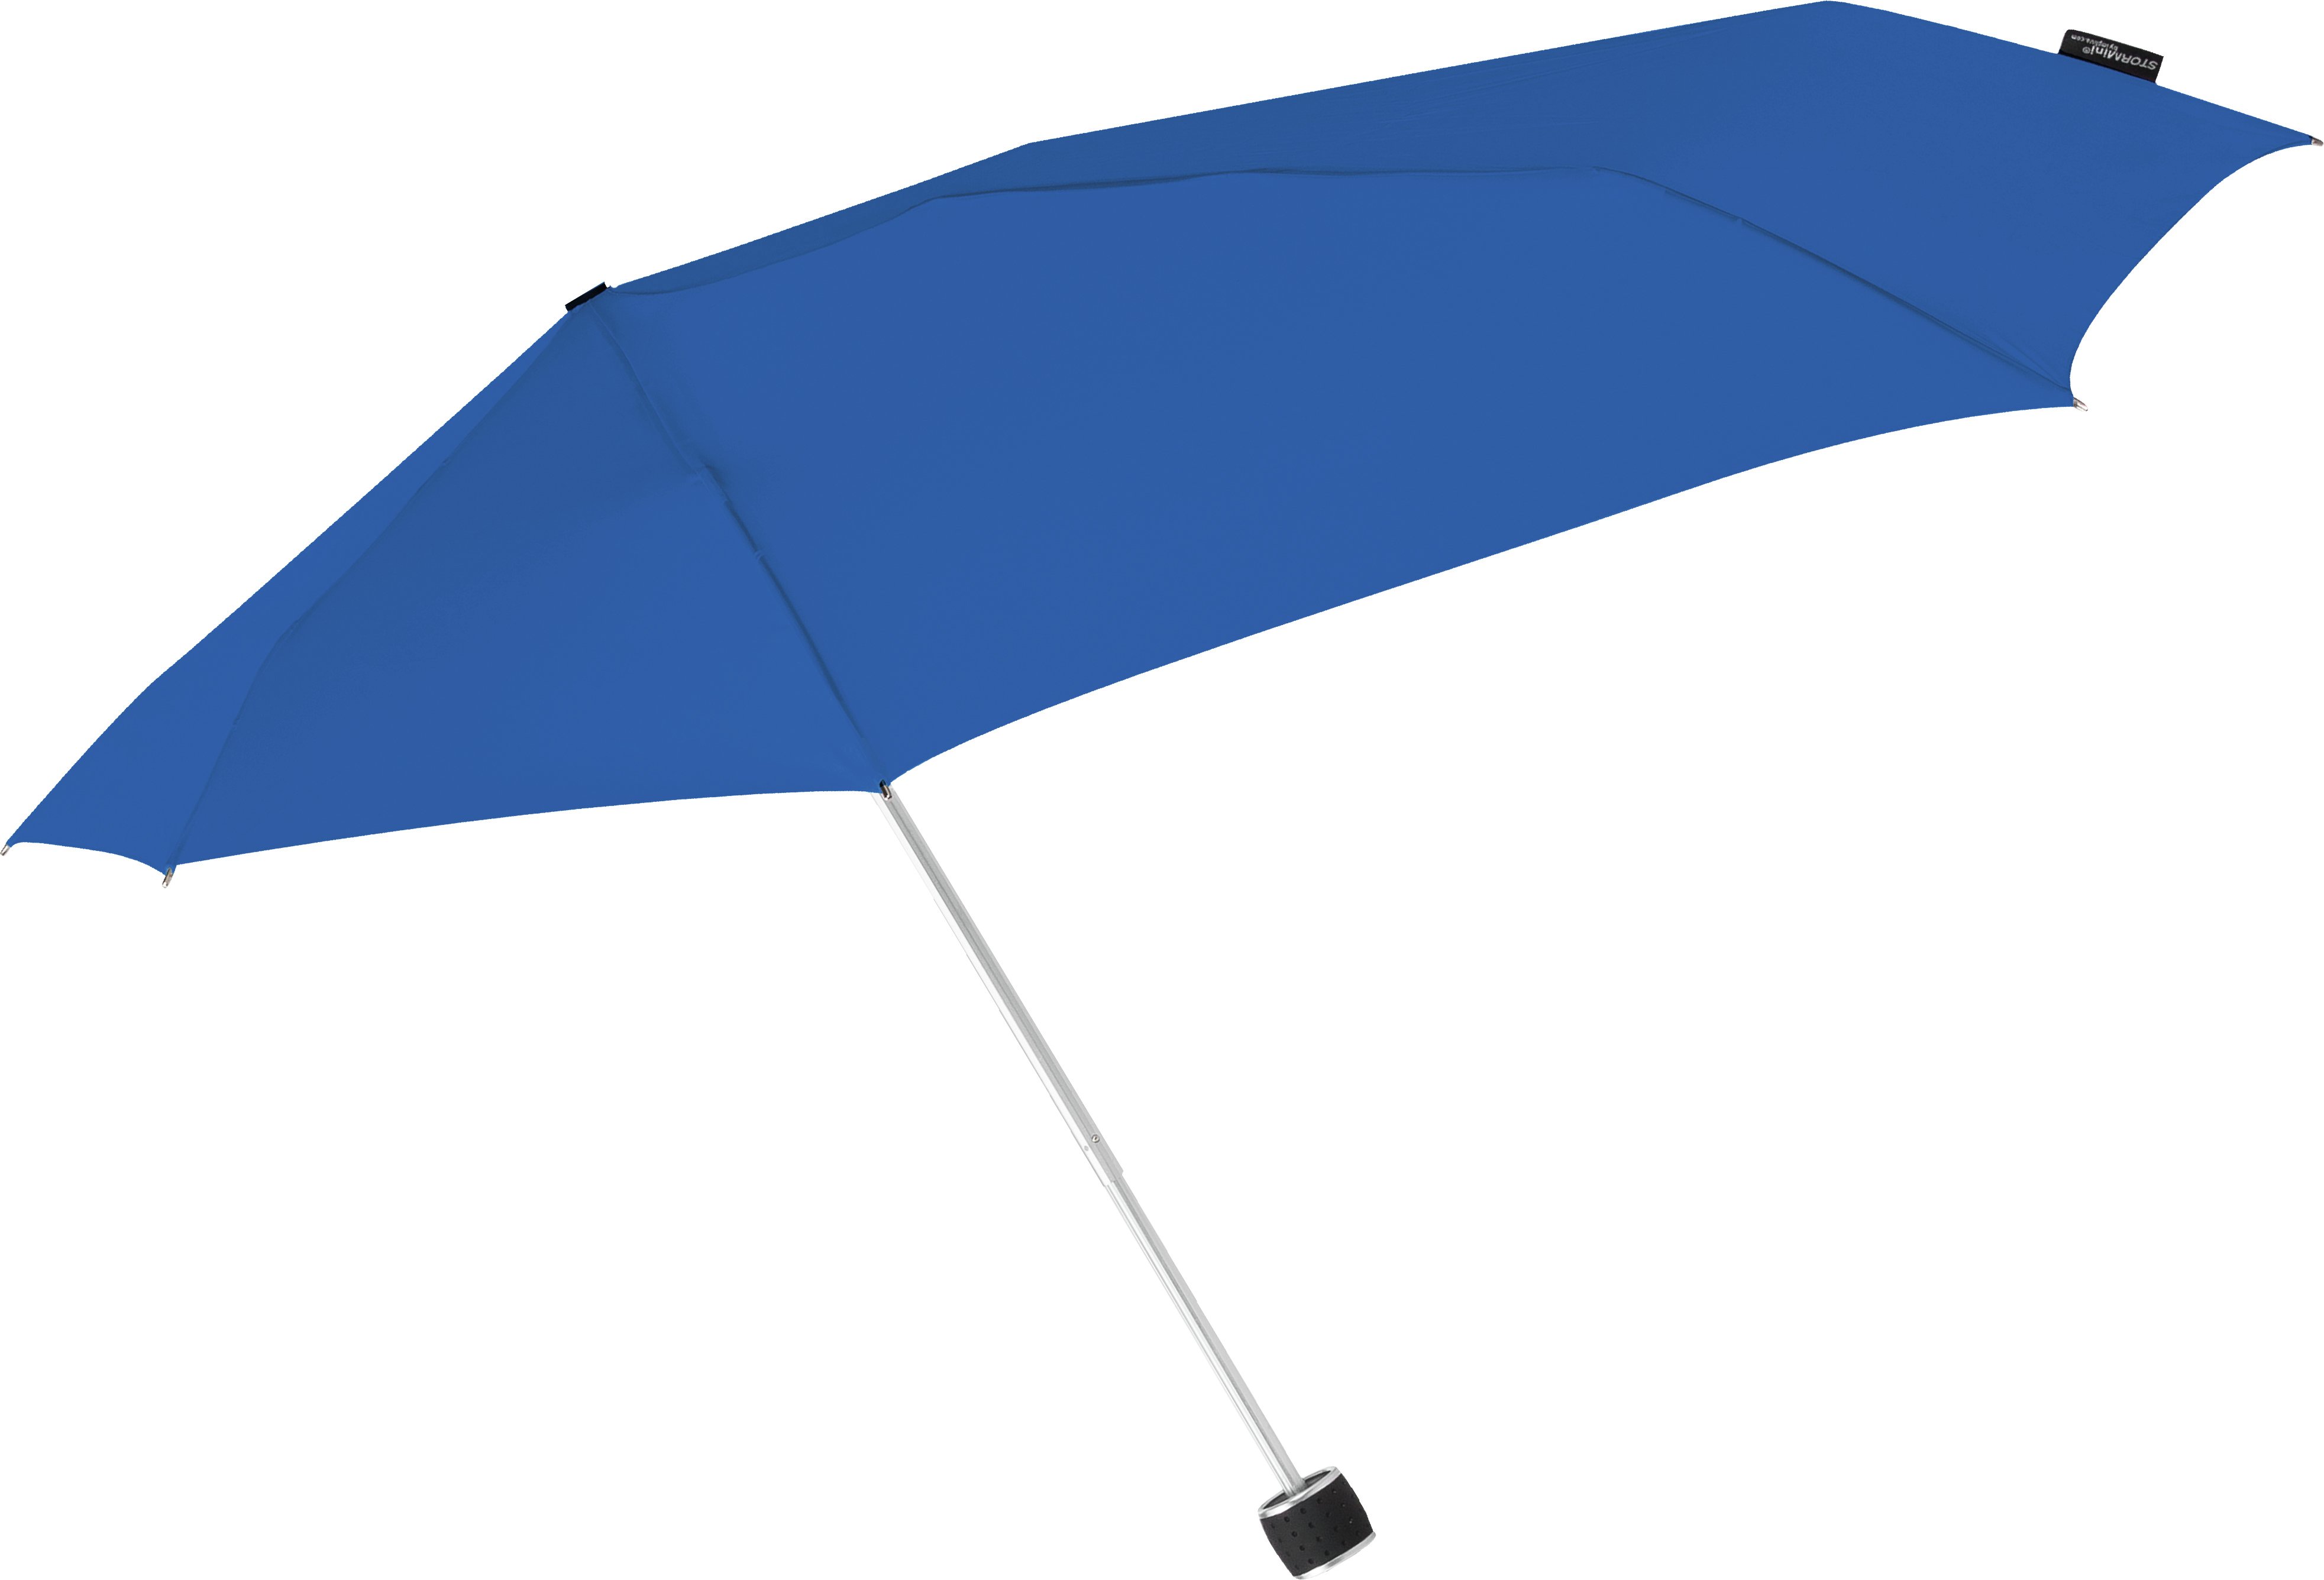 Stealthbomber Folding Umbrella - Blue.